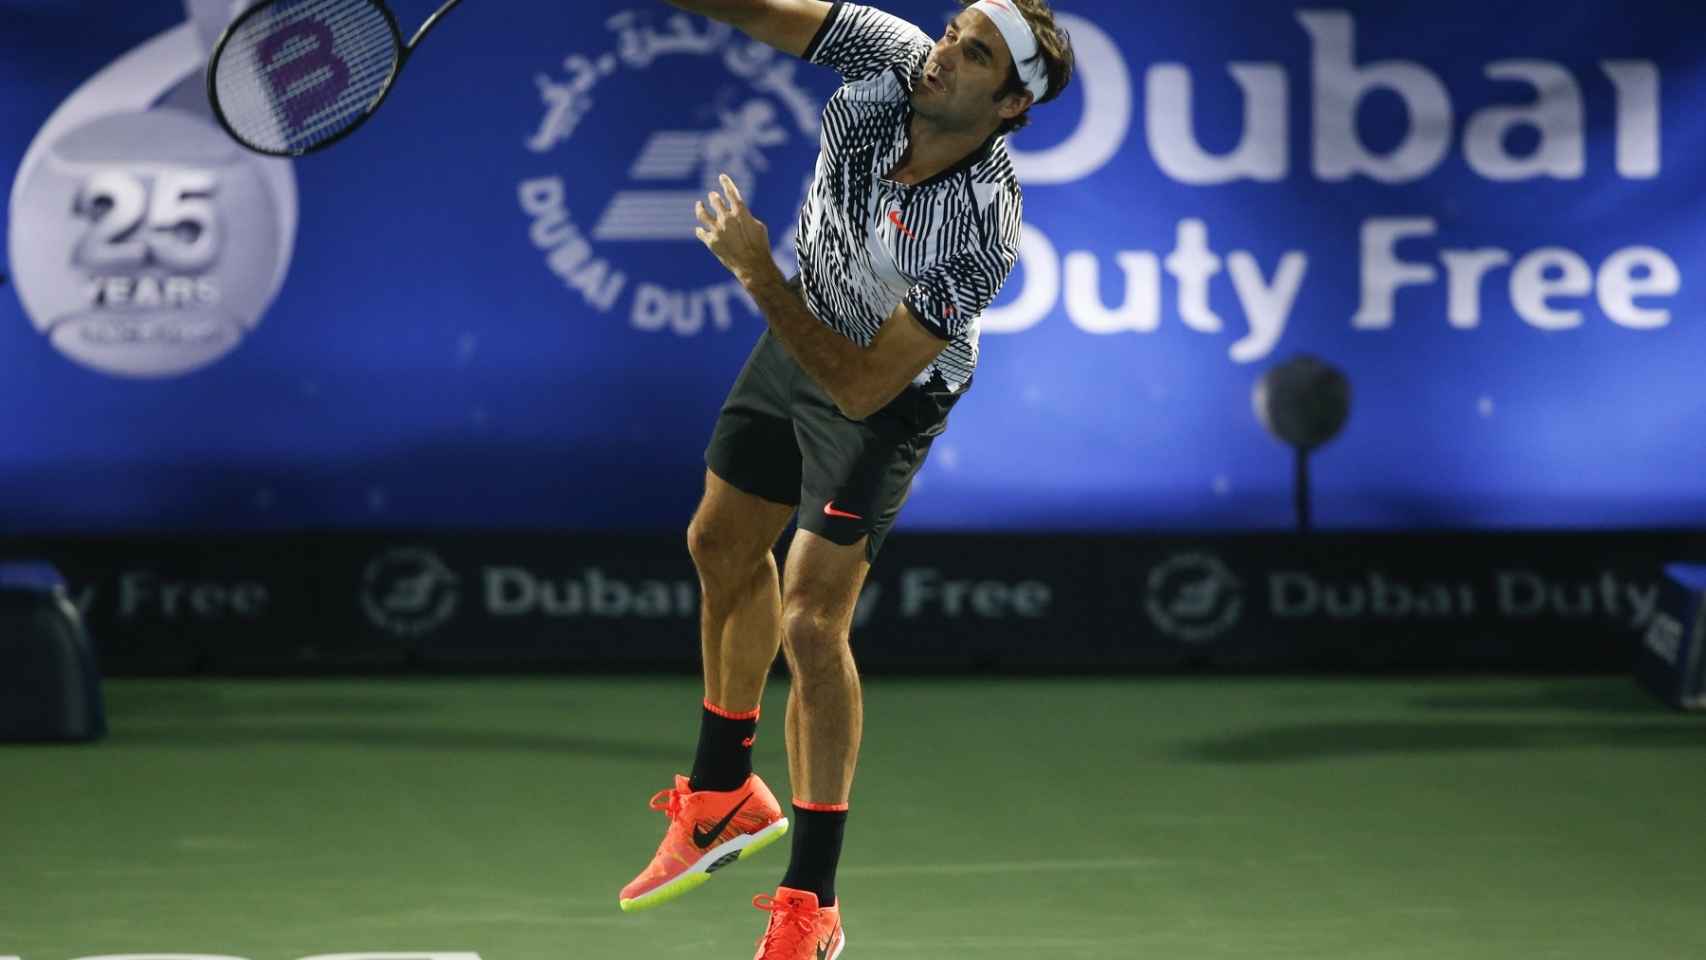 Roger Federer durante su debut en Dubái.